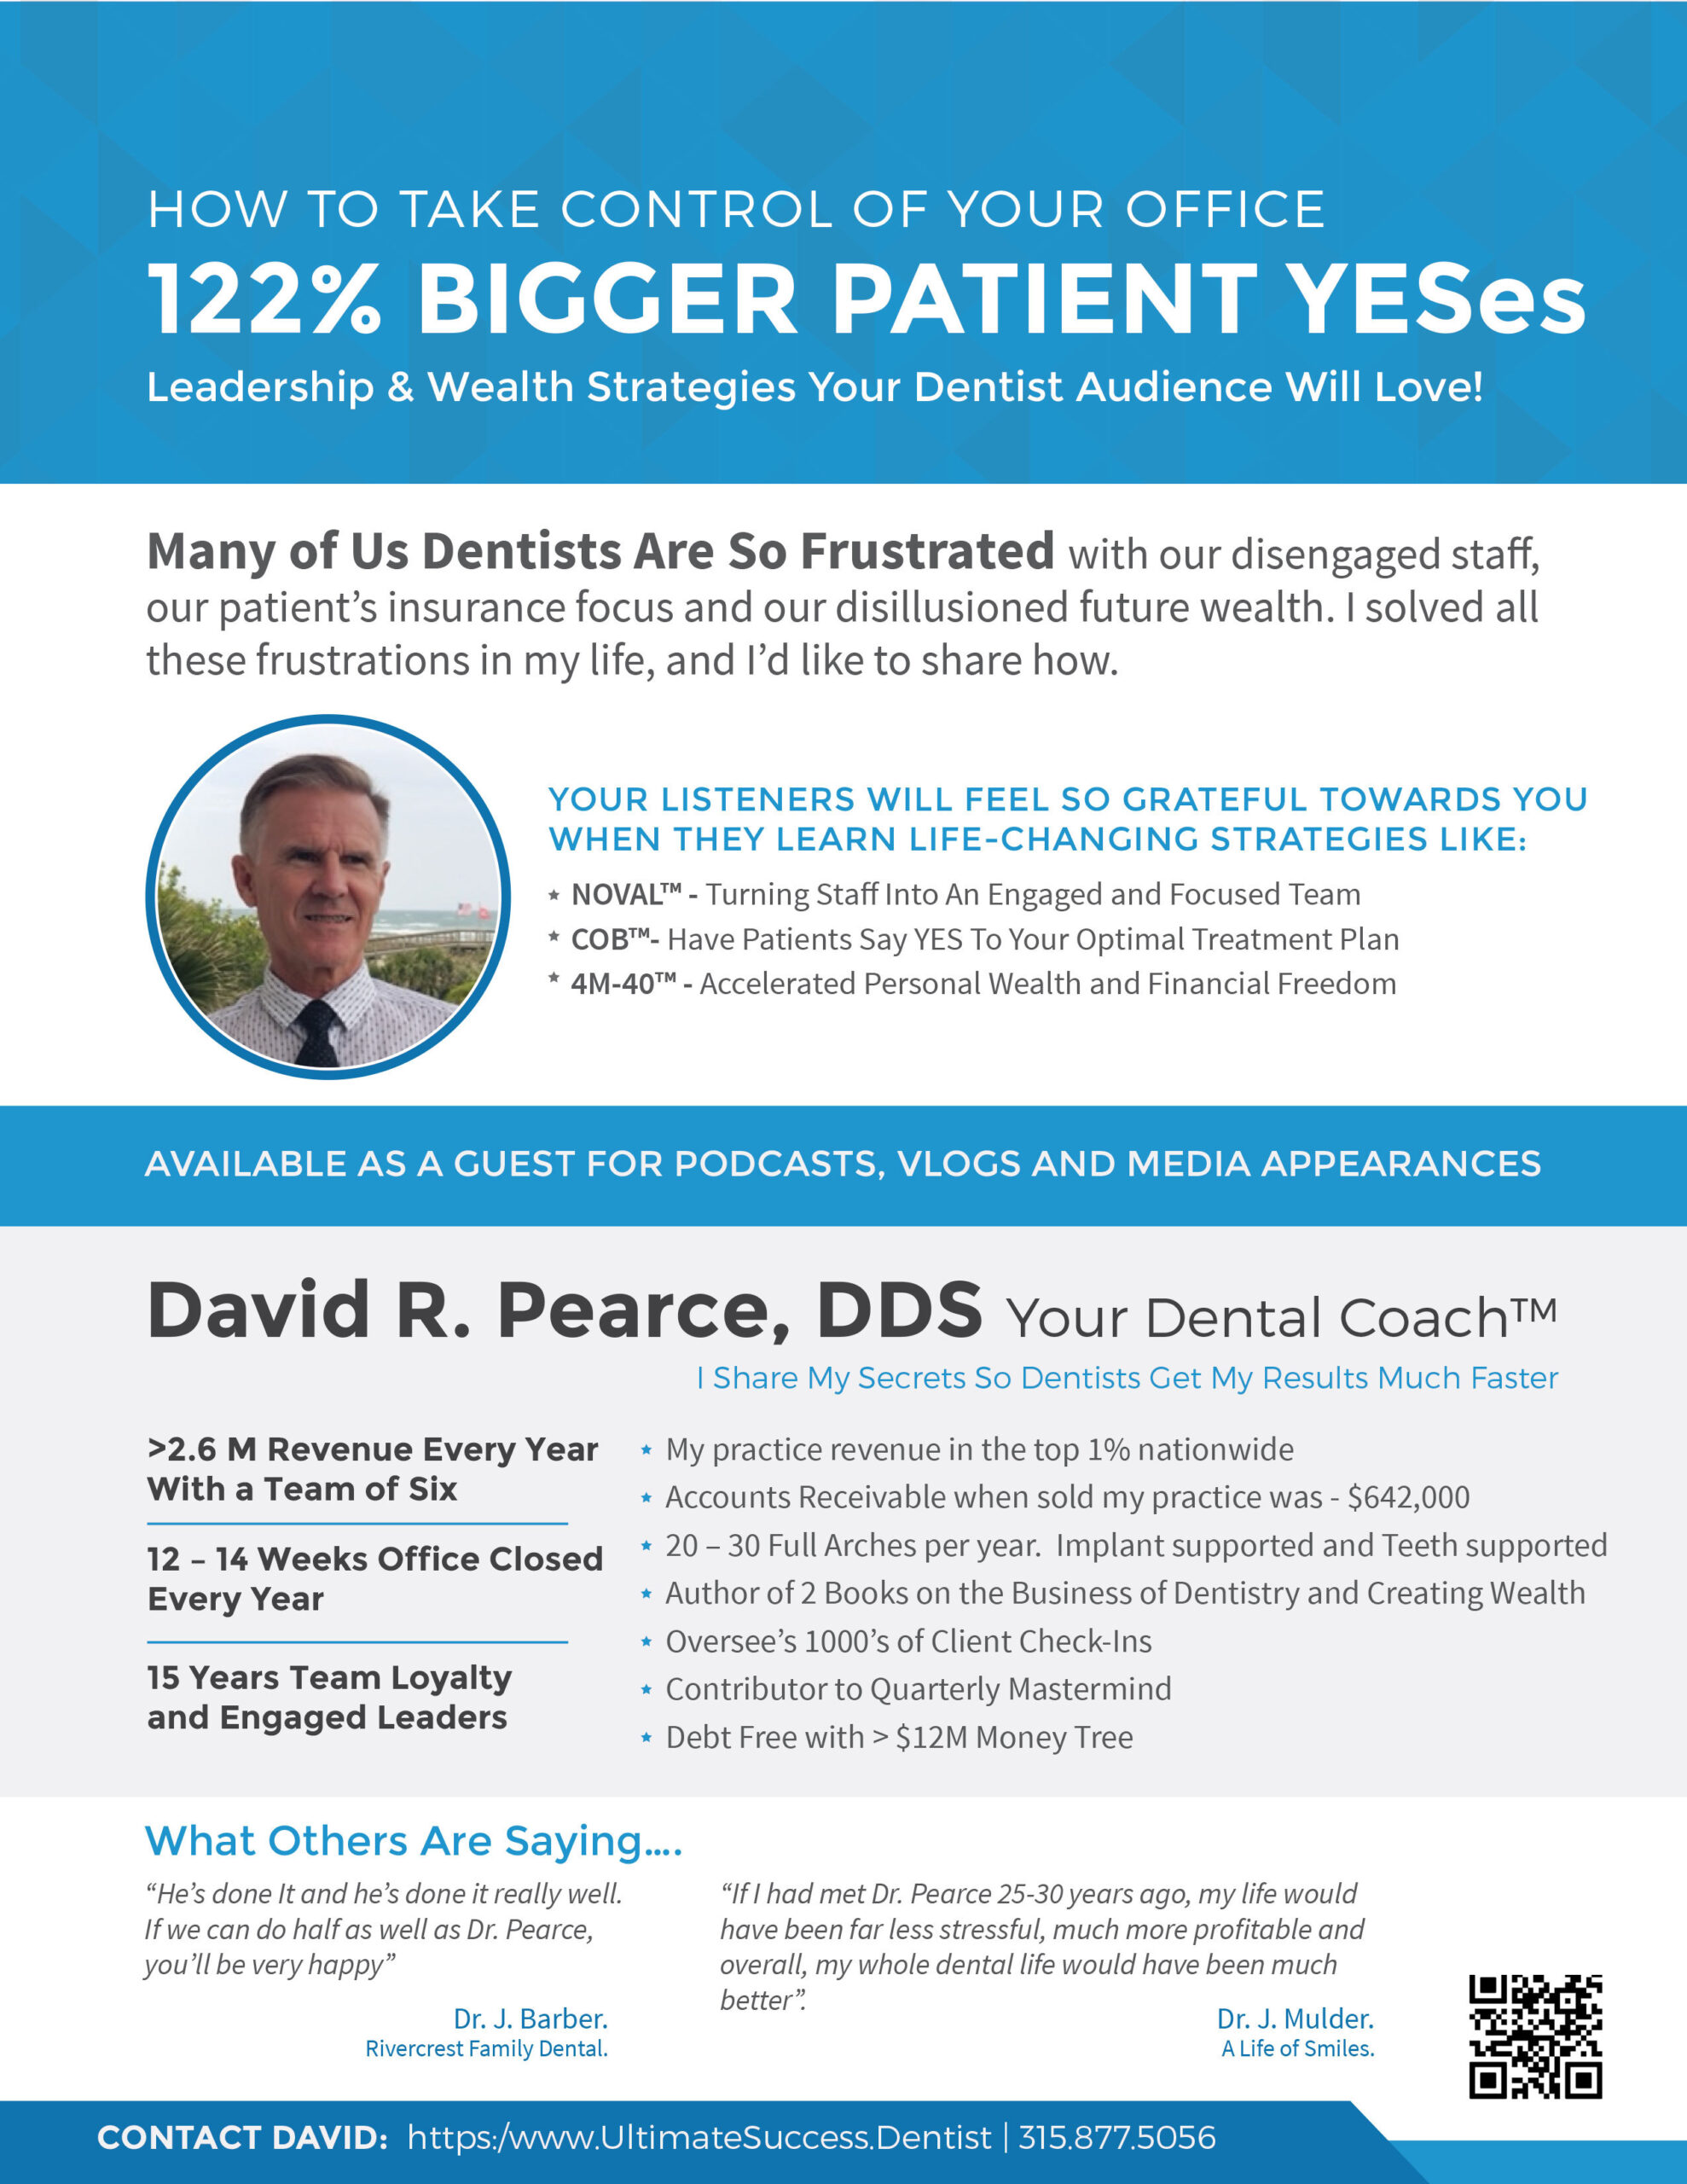 David Pearce - Dental Coach